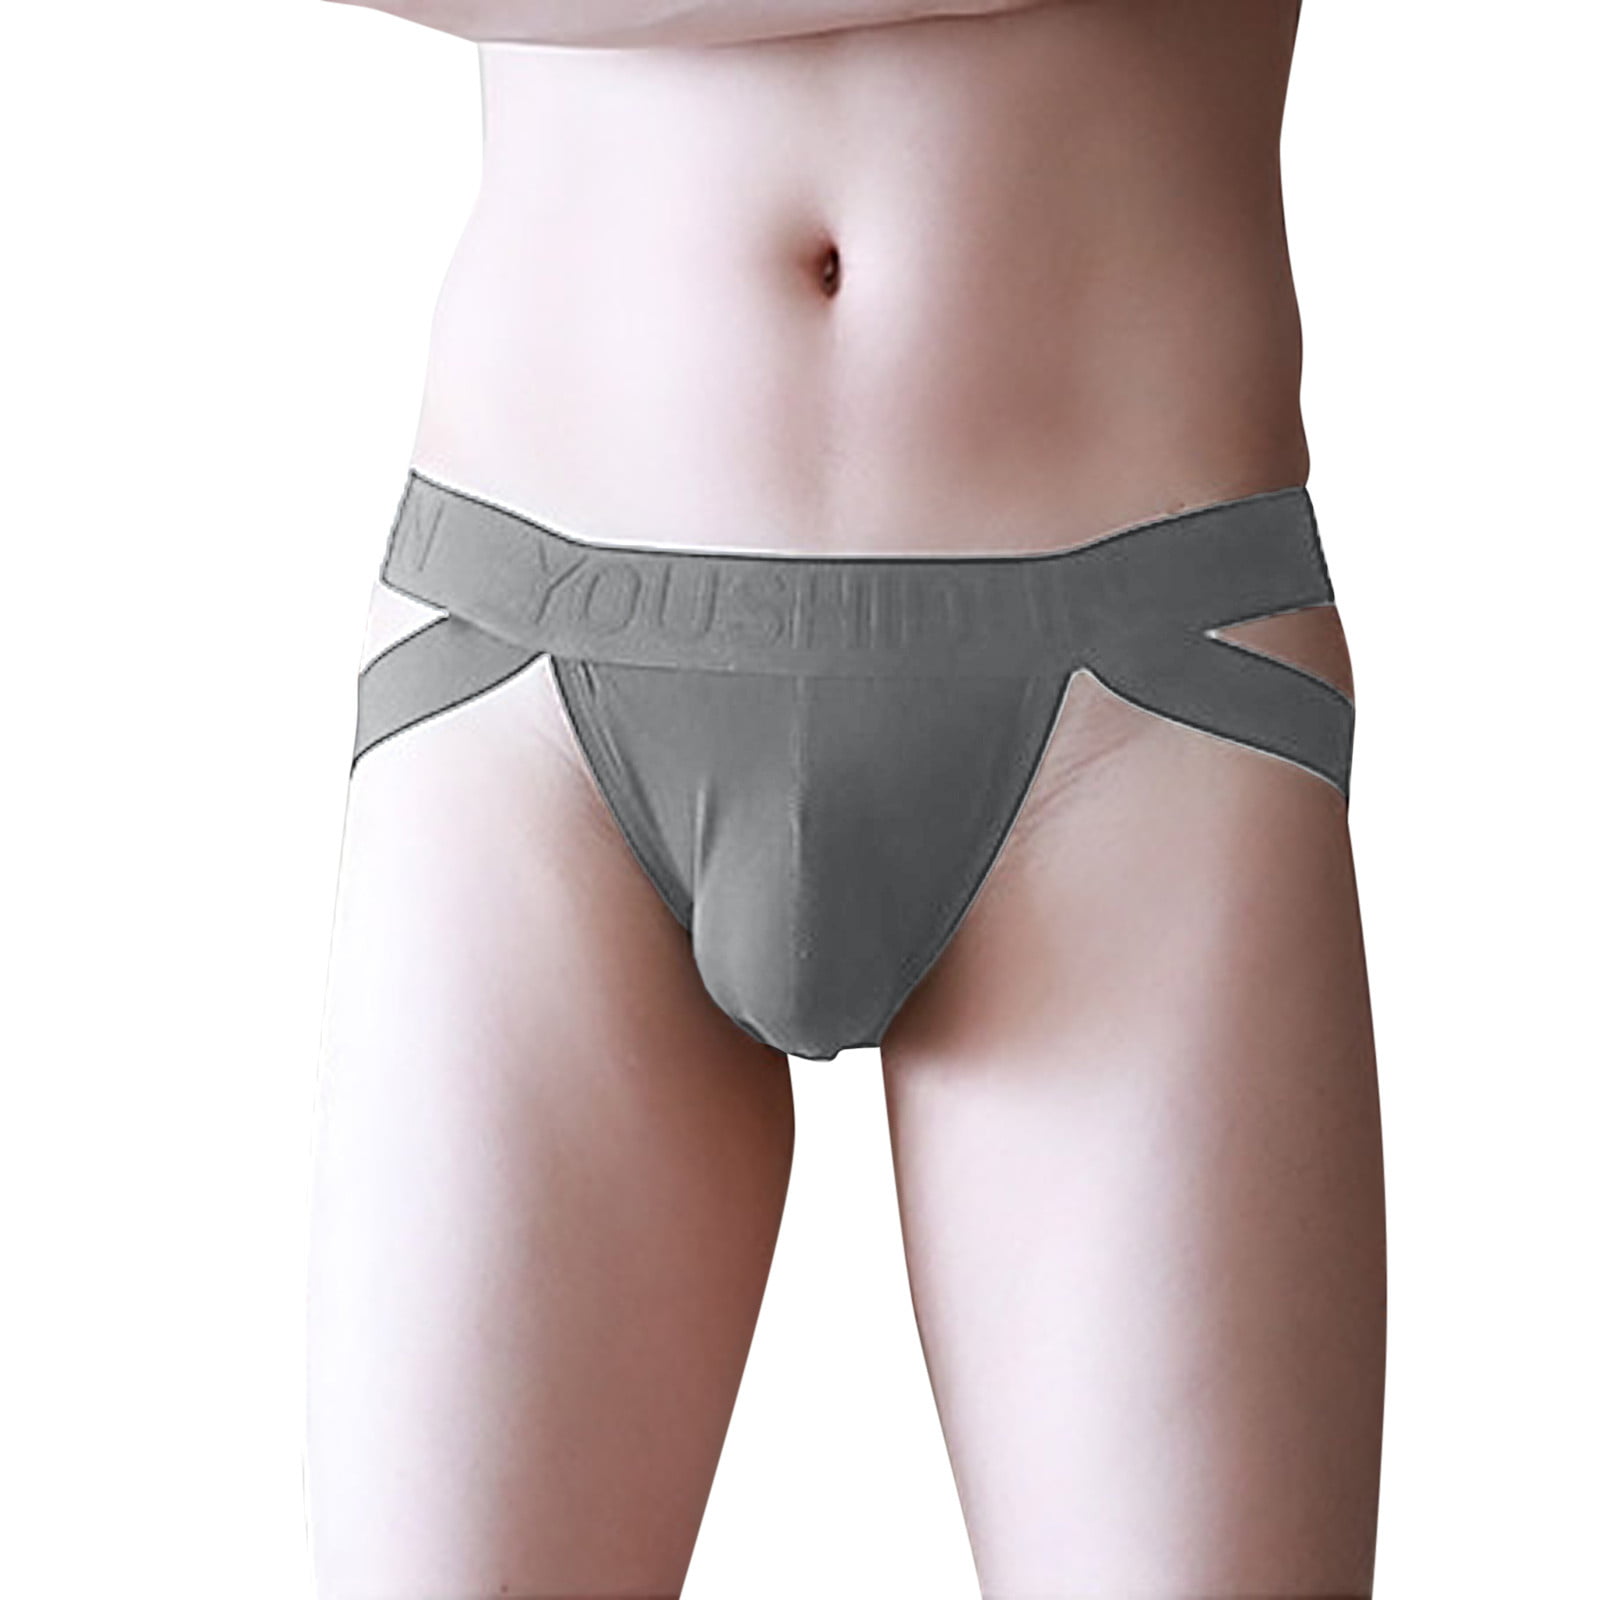 Cathalem Underpants for Men Comfortable Men's Underwear Comfort Soft  Underwear Briefs Low Rise(Pink,XL) 